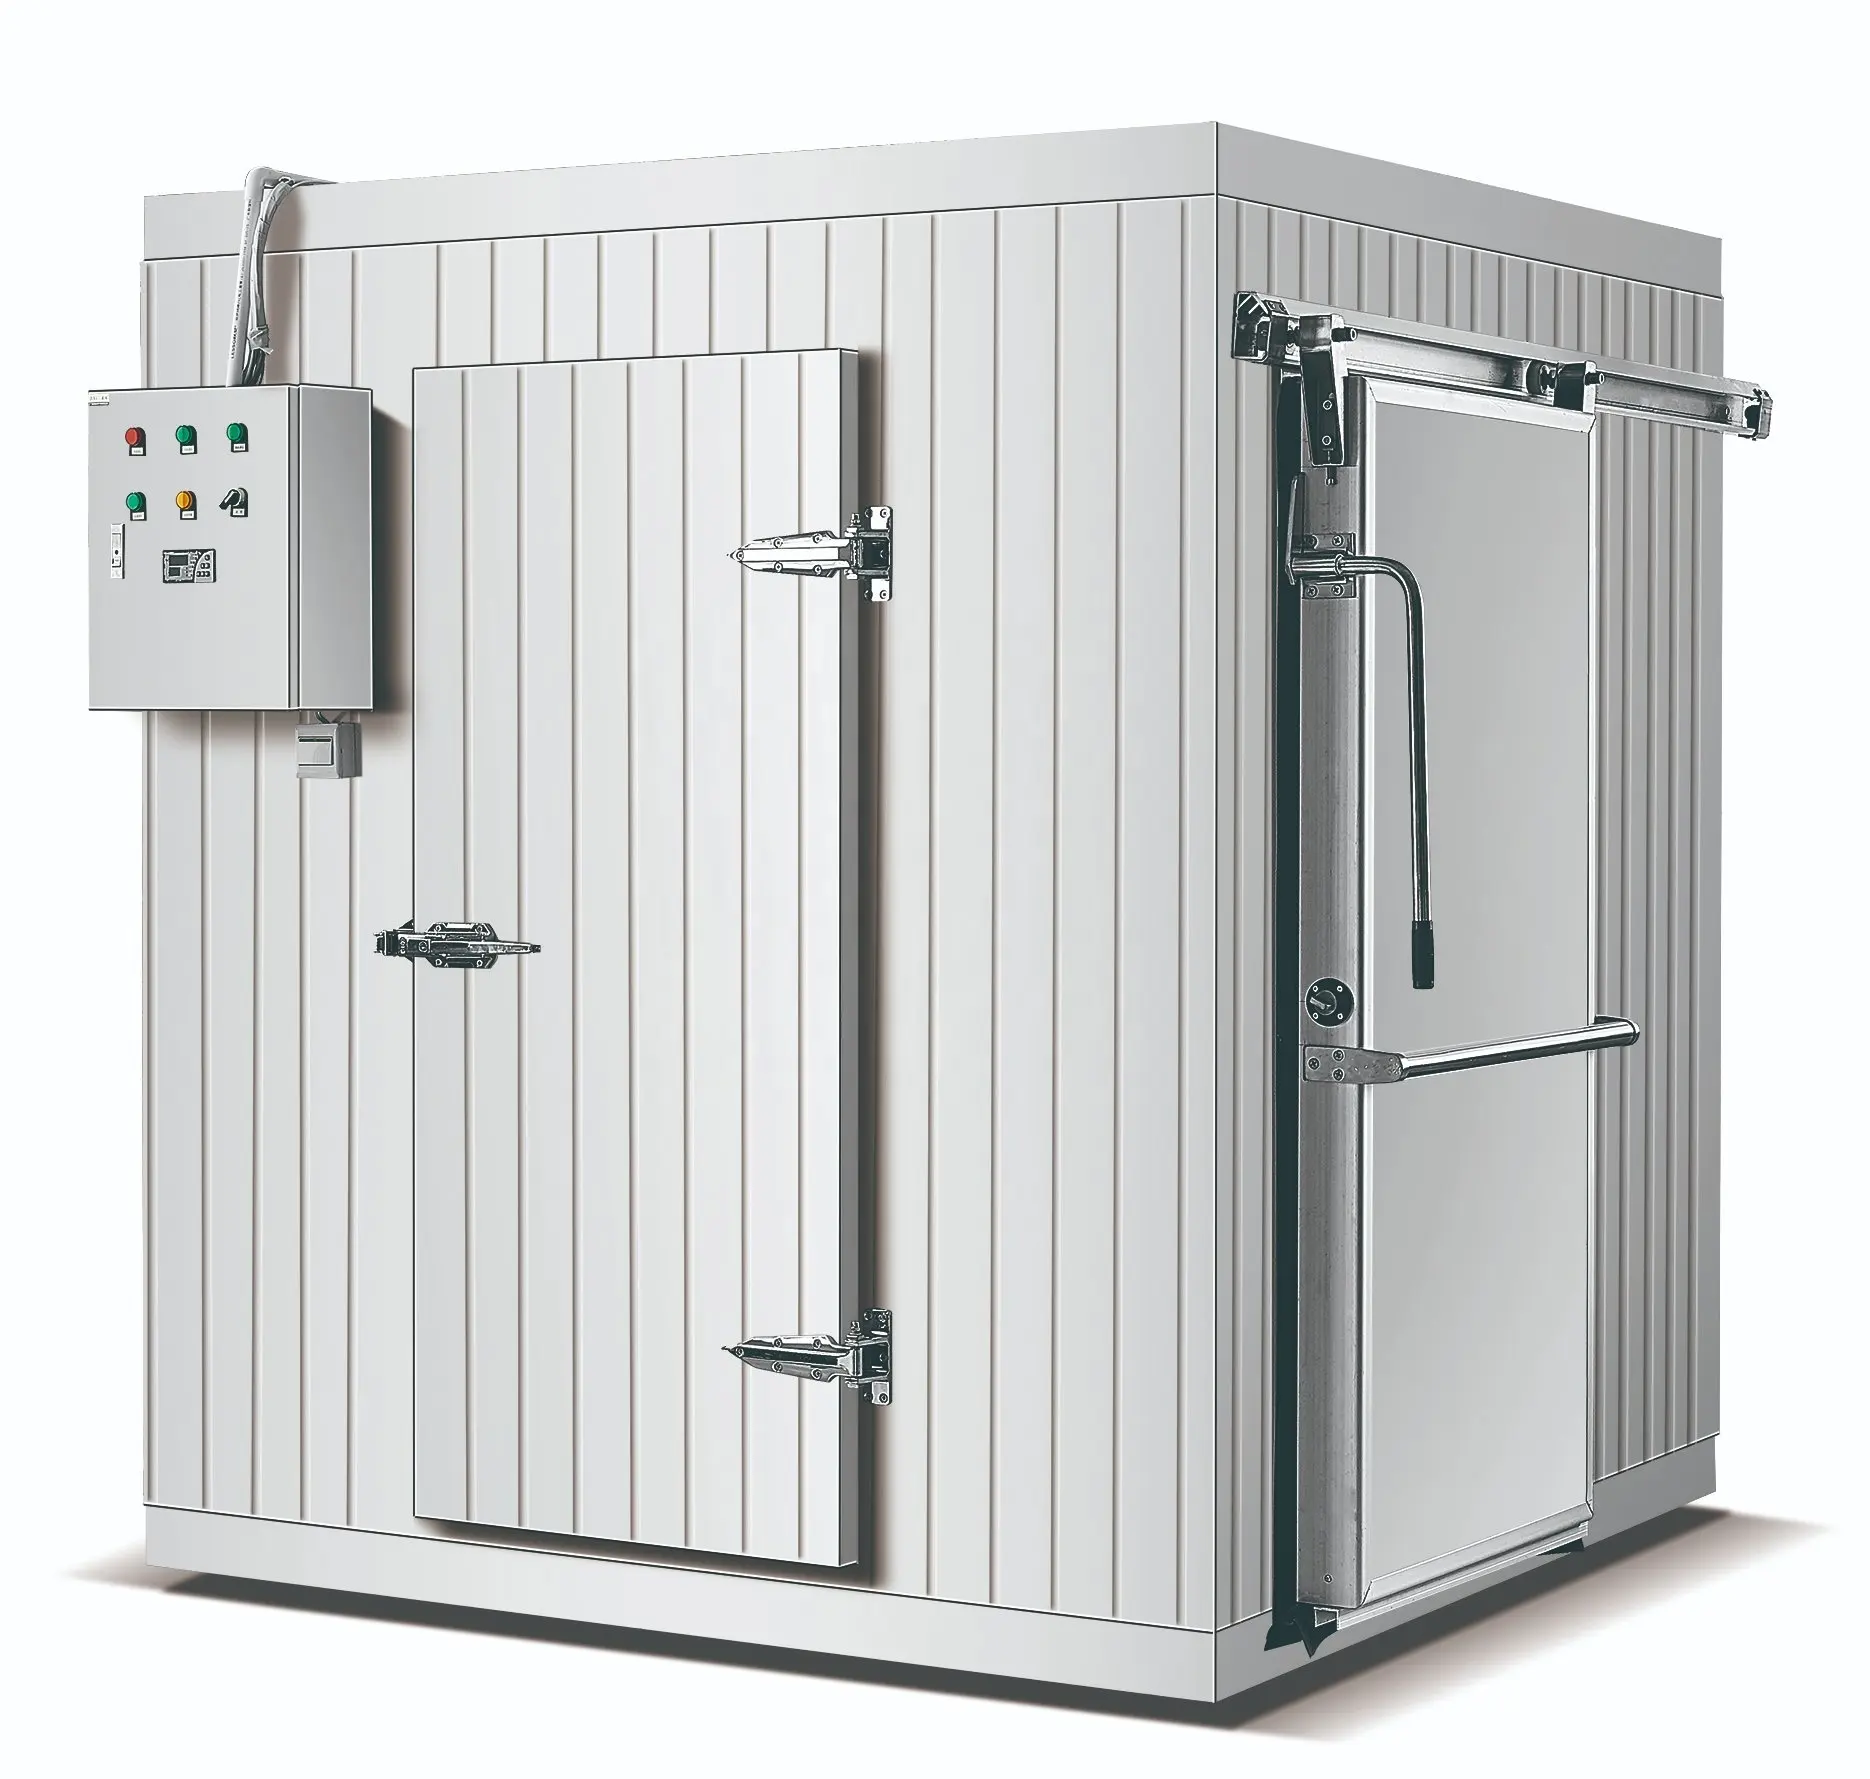 Customized Modular Cold Room Freezer For Fish 1 Ton Walk In Freezer Refrigeration Unit